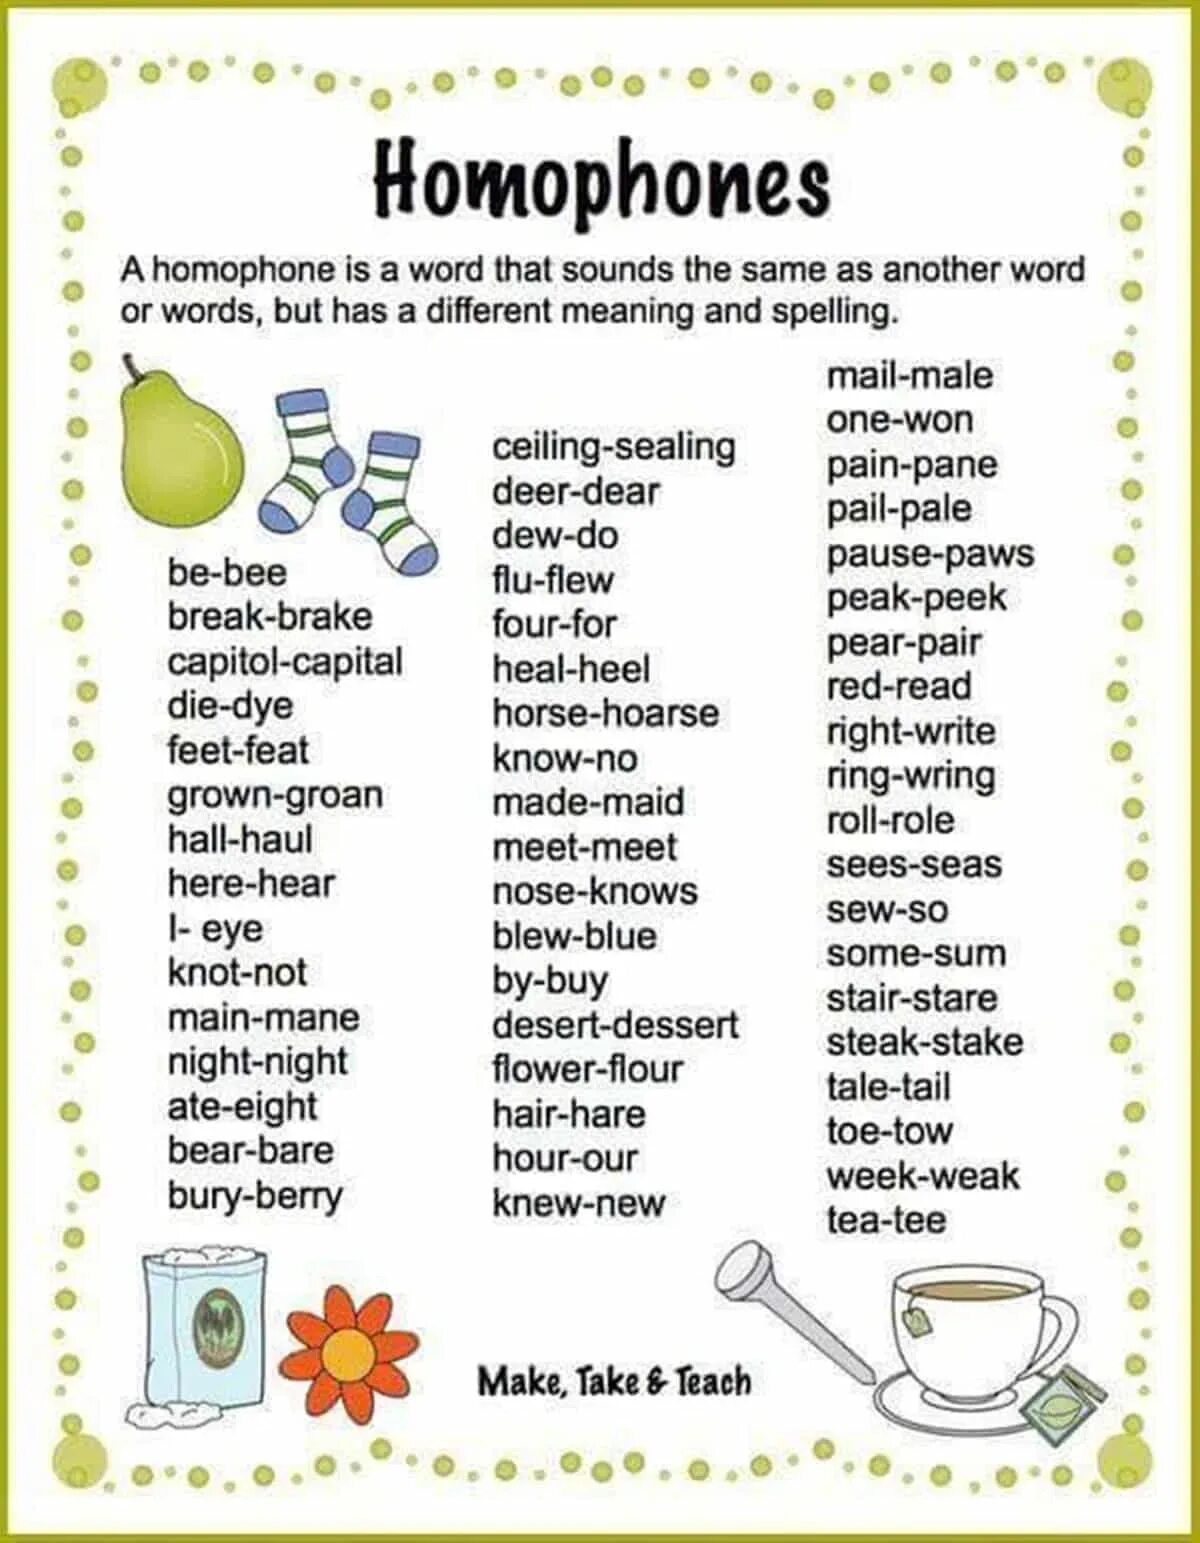 Homophones in English. Омофоны в английском языке. Английские слова. Homophones in English таблица. Words with many meanings